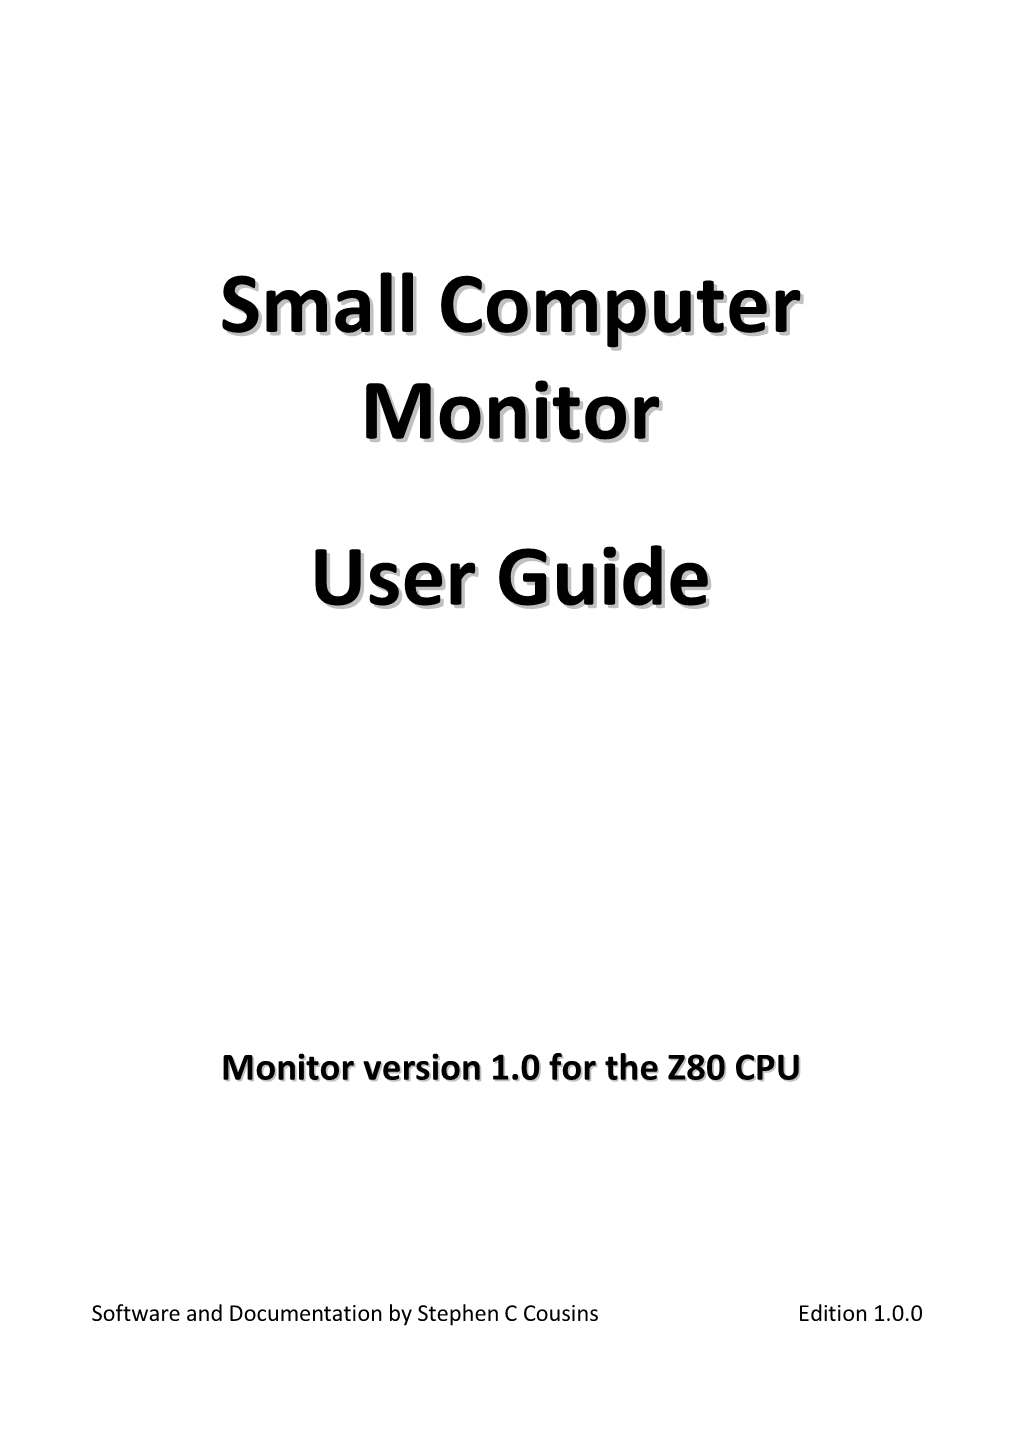 Small Computer Monitor User Guide